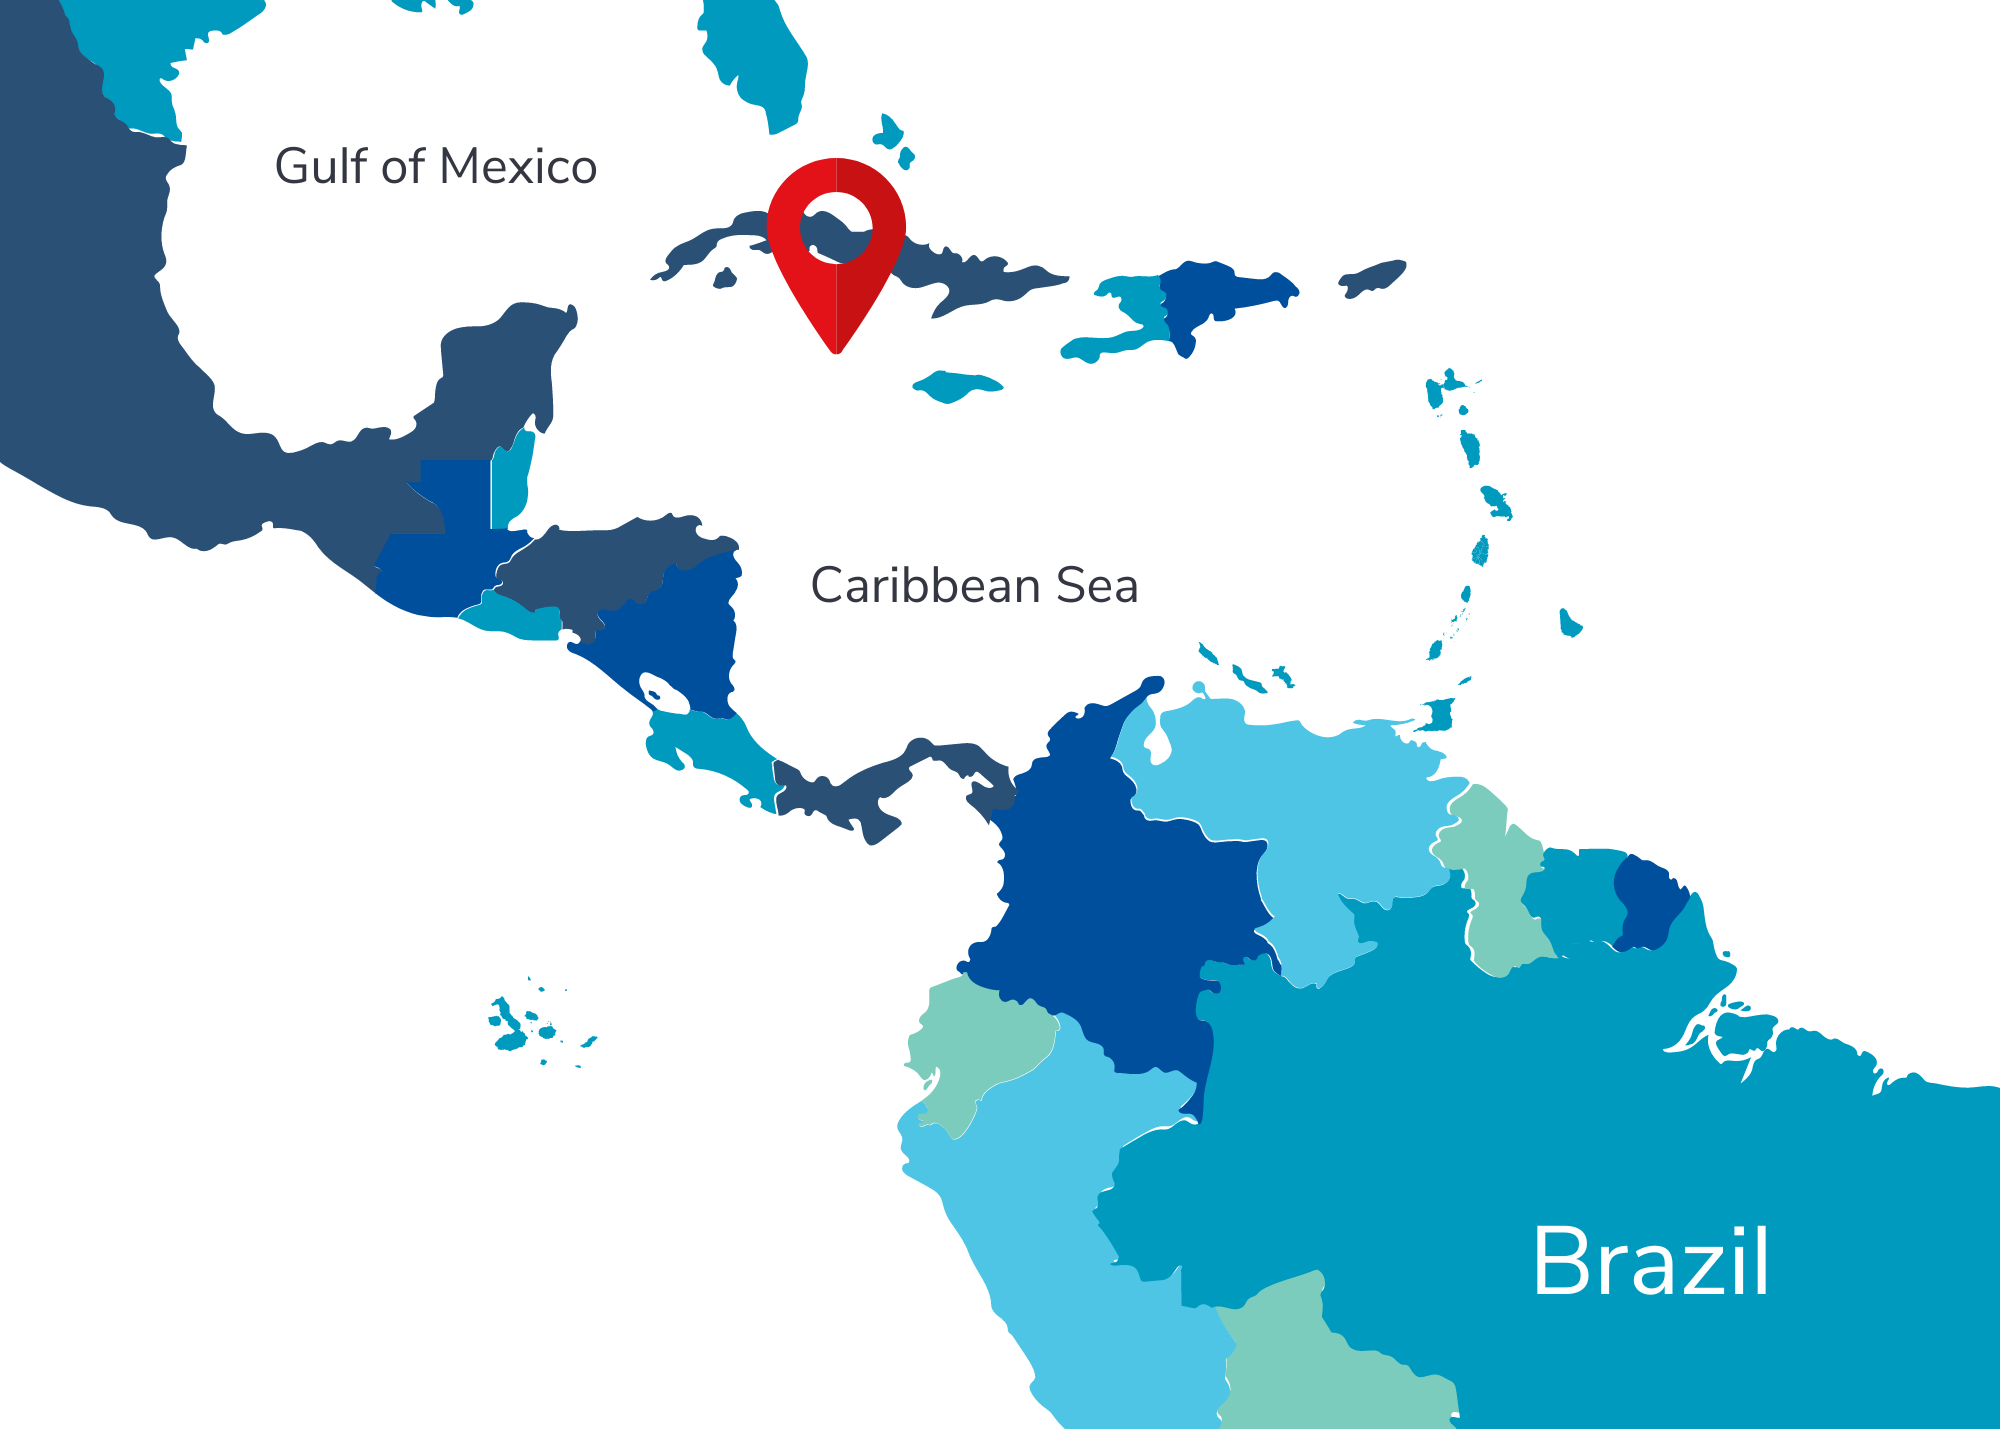 Cayman Brac map